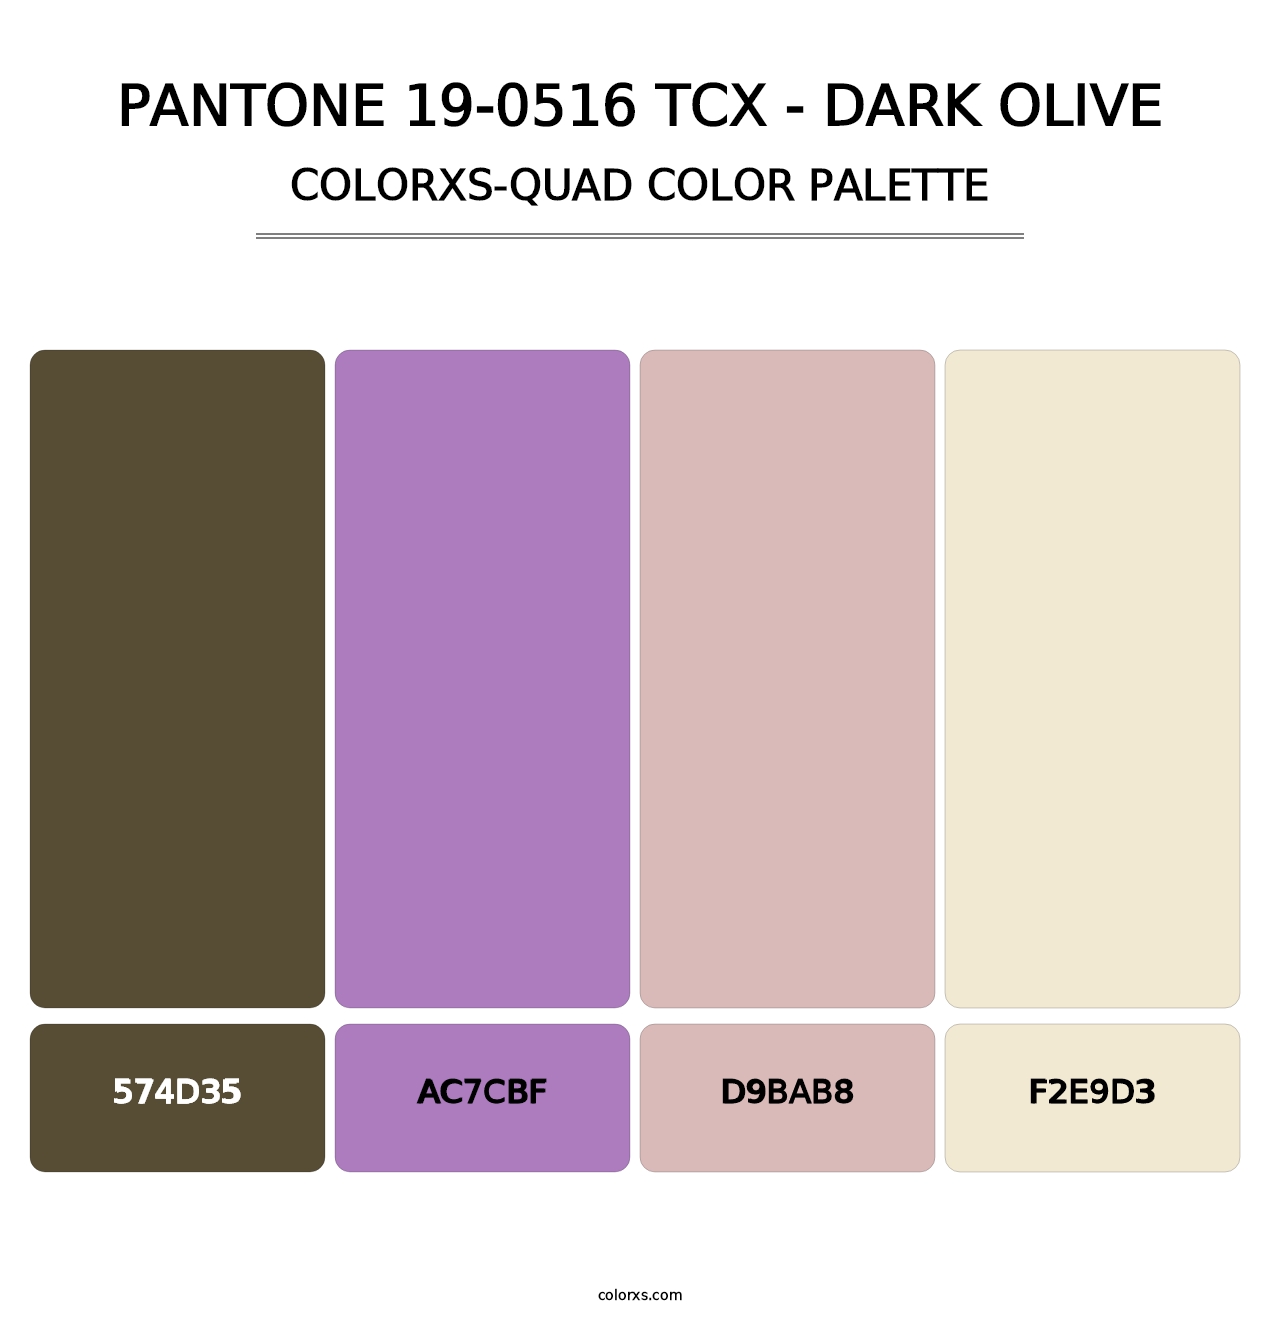 PANTONE 19-0516 TCX - Dark Olive - Colorxs Quad Palette